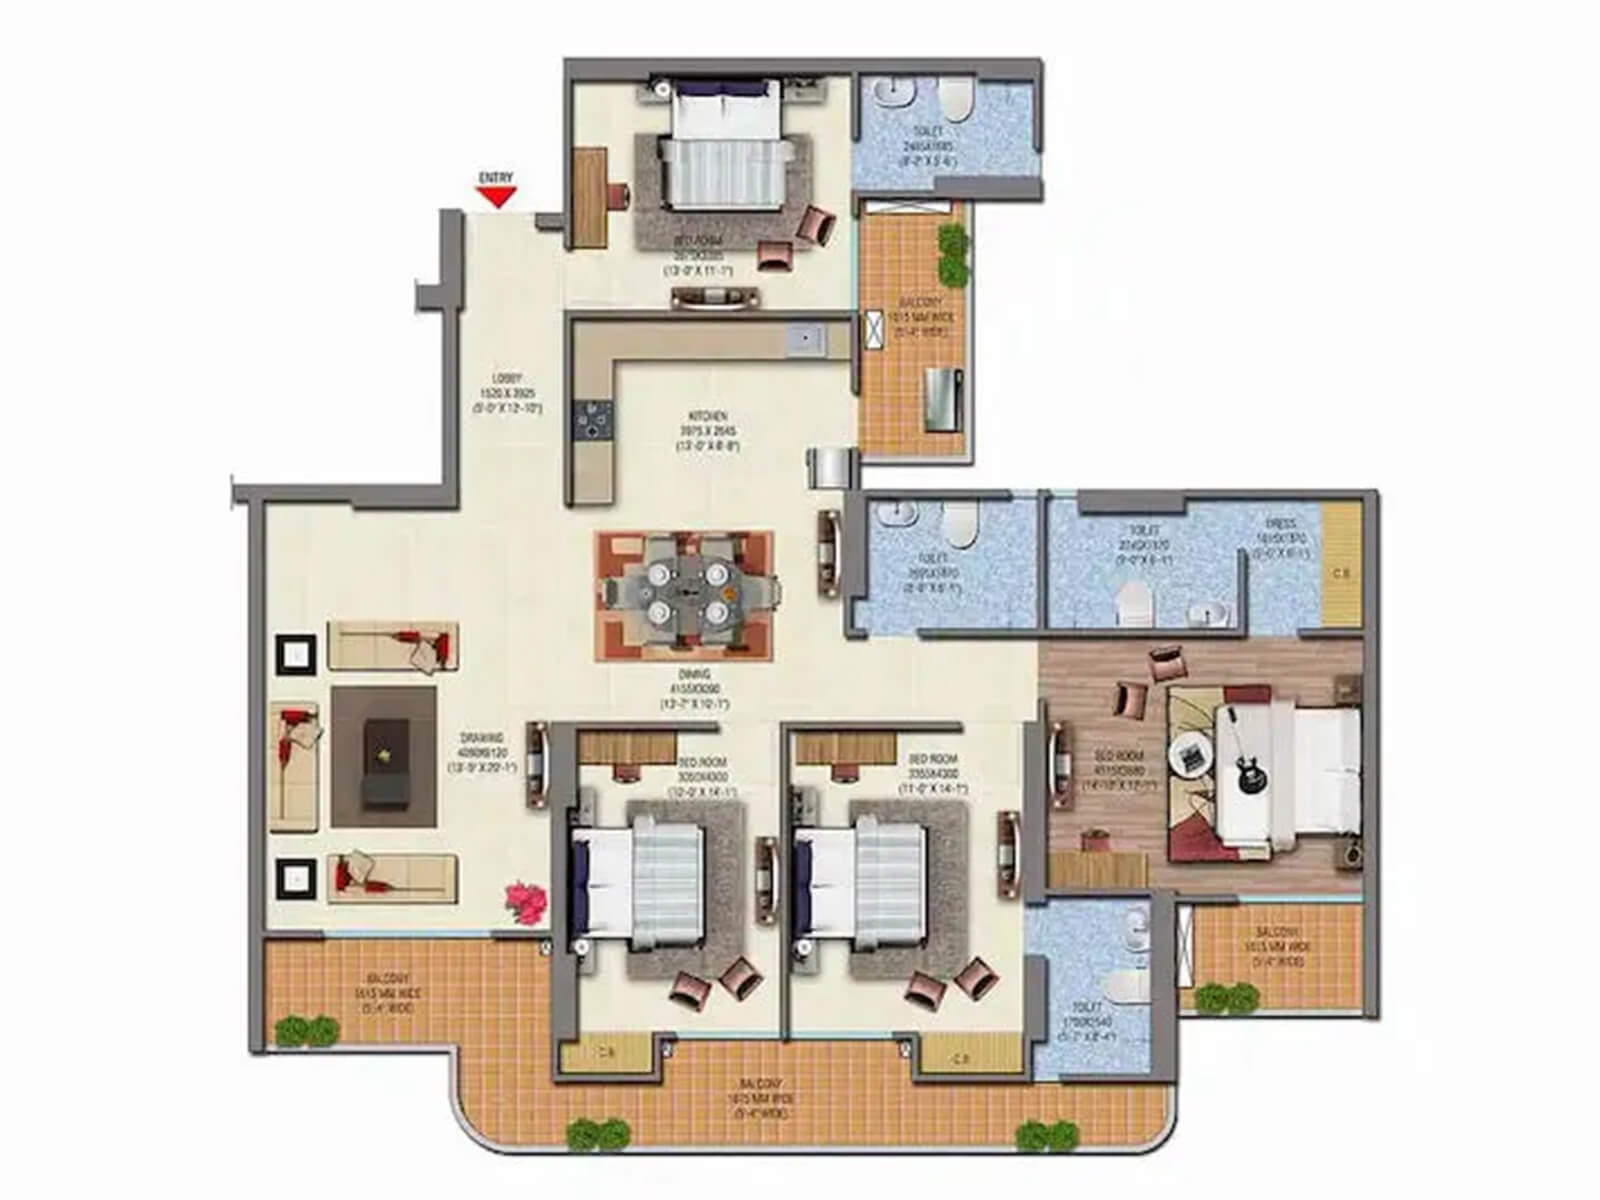  4 BHK Floor Plan at Saya Gold Avenue - Buy 4 BHK Residentail Luxury Apartments in Indirapuram Ghaziabad